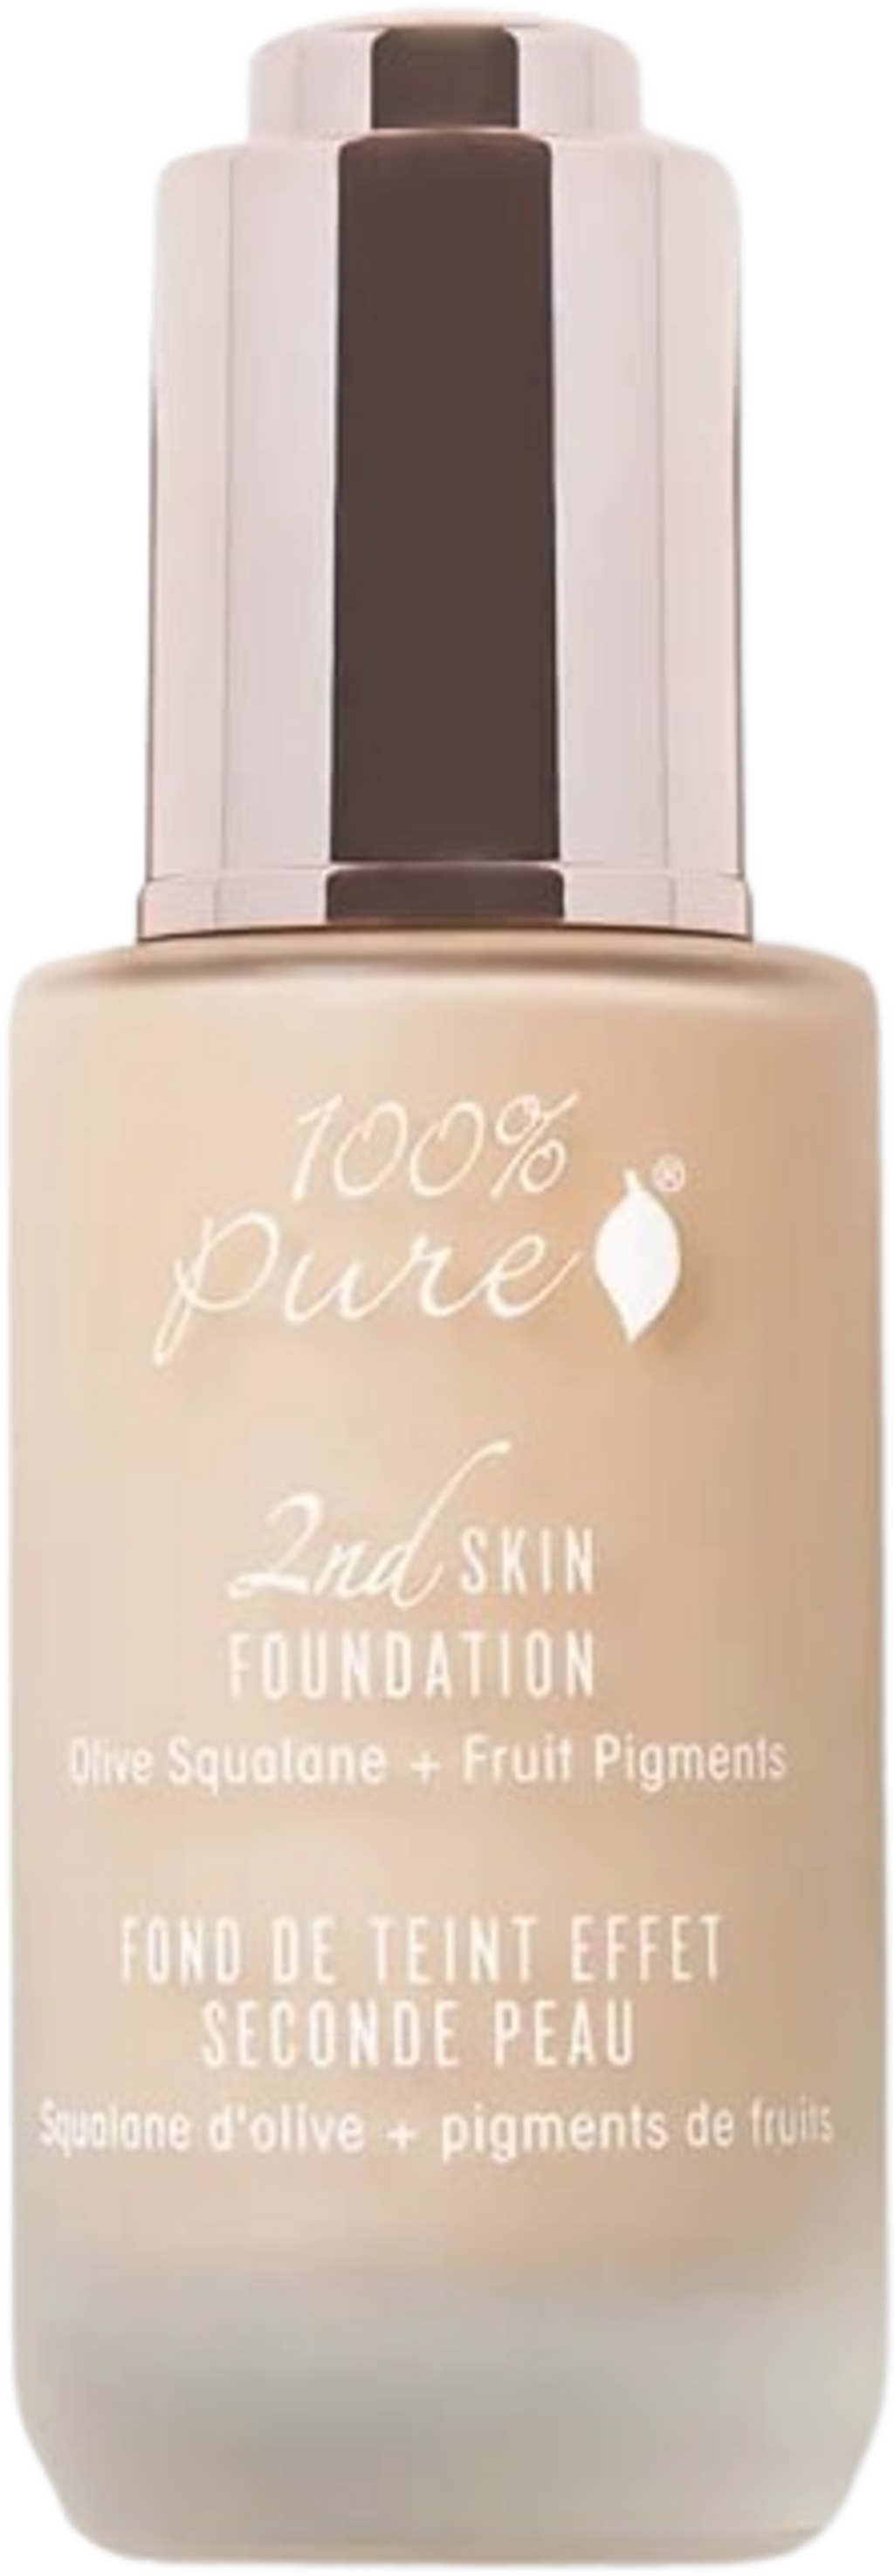 100% Pure 2nd Skin Foundation - Ecco Verde Online Shop